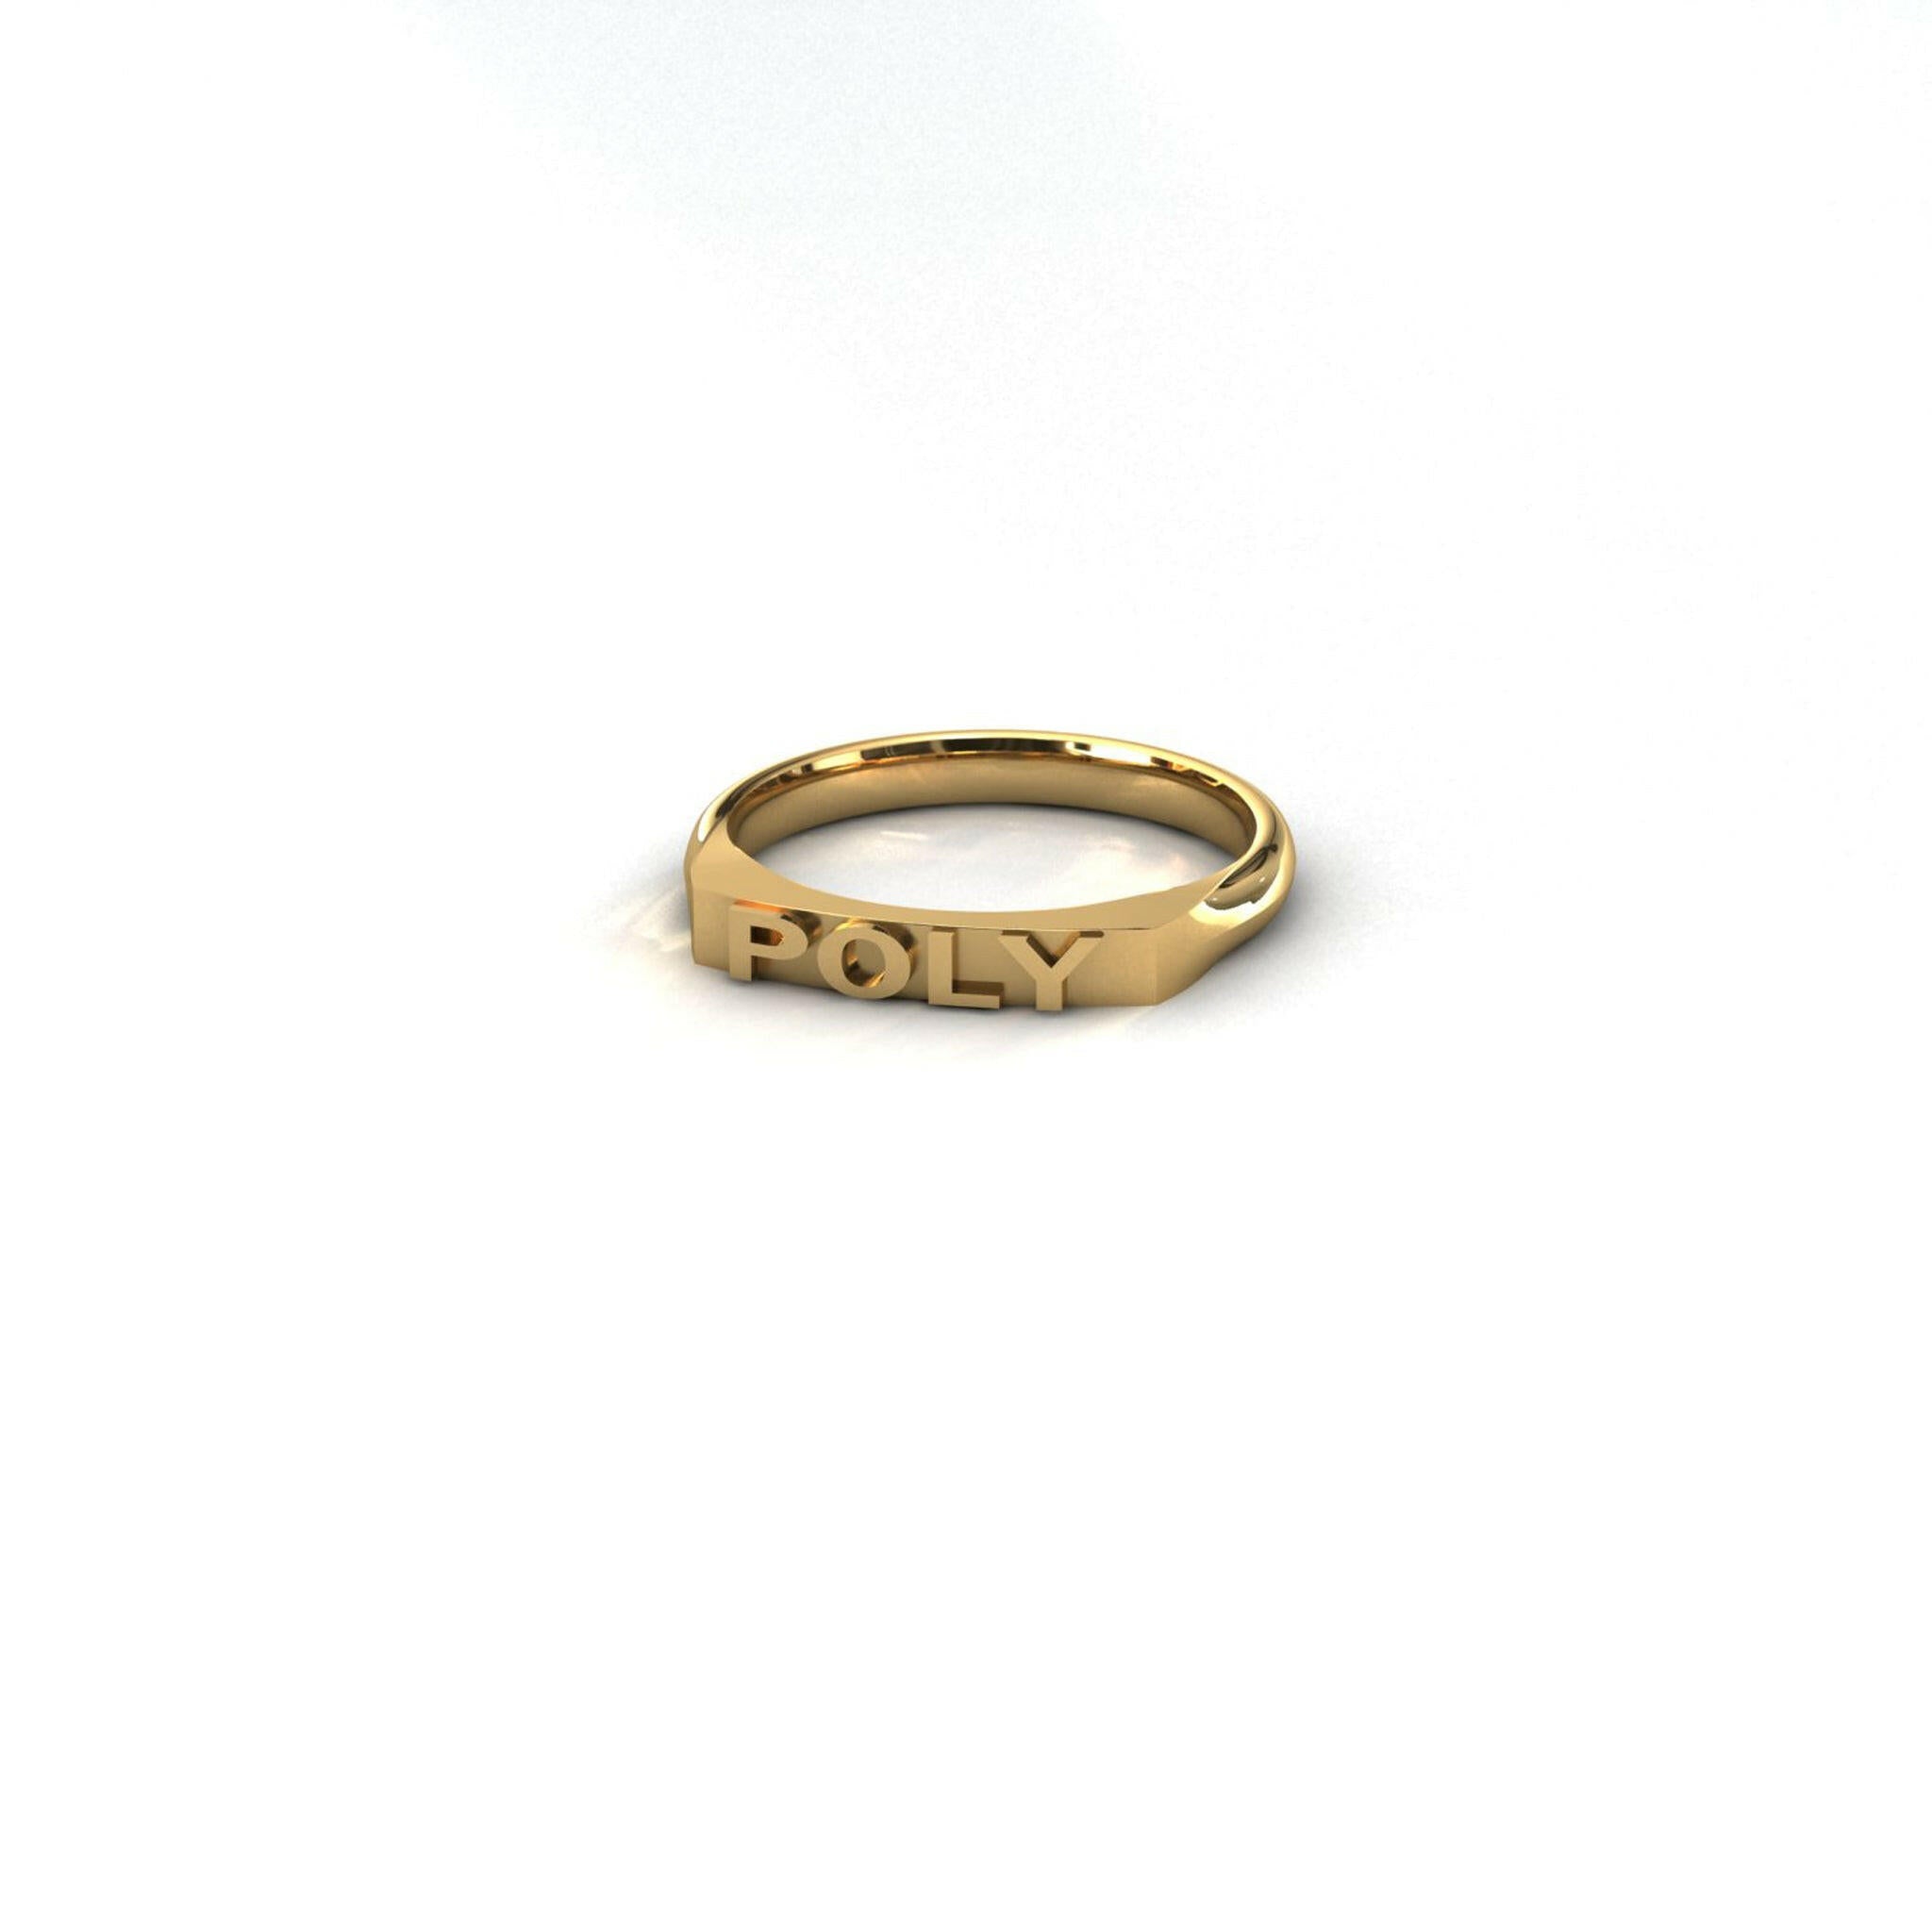 poly - Ilah Cibis Jewelry-Rings